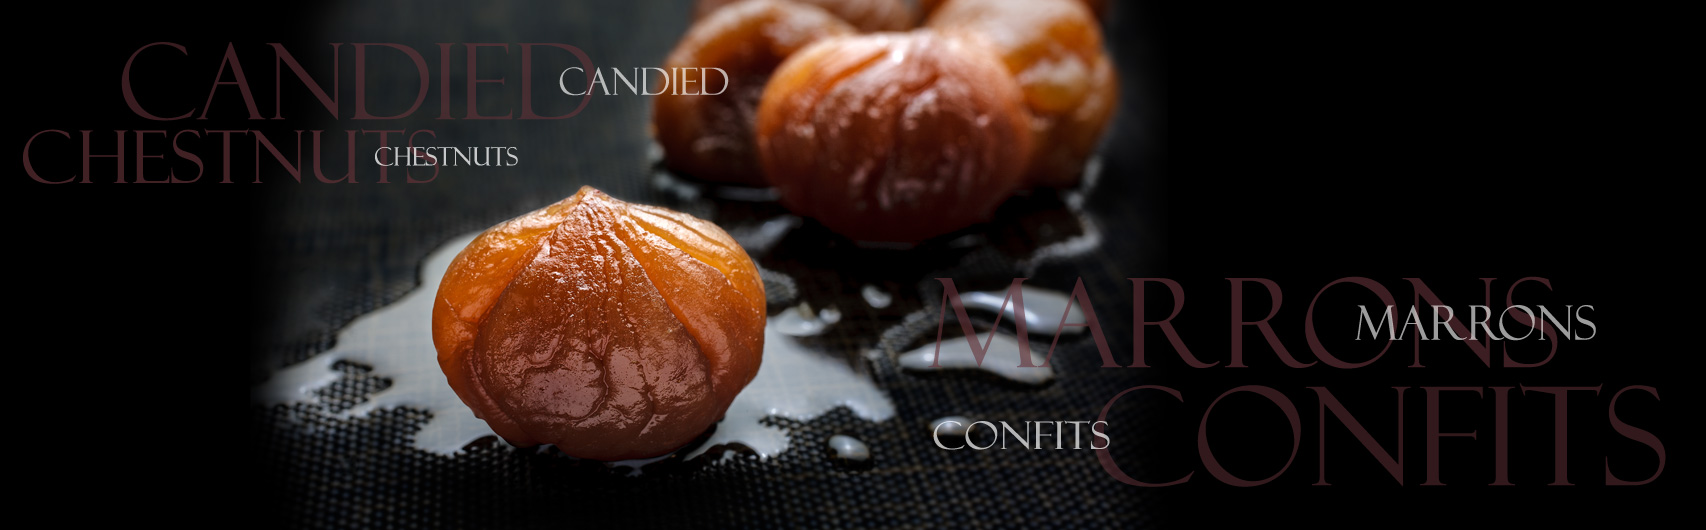 cardelion chesnuts confits marrons